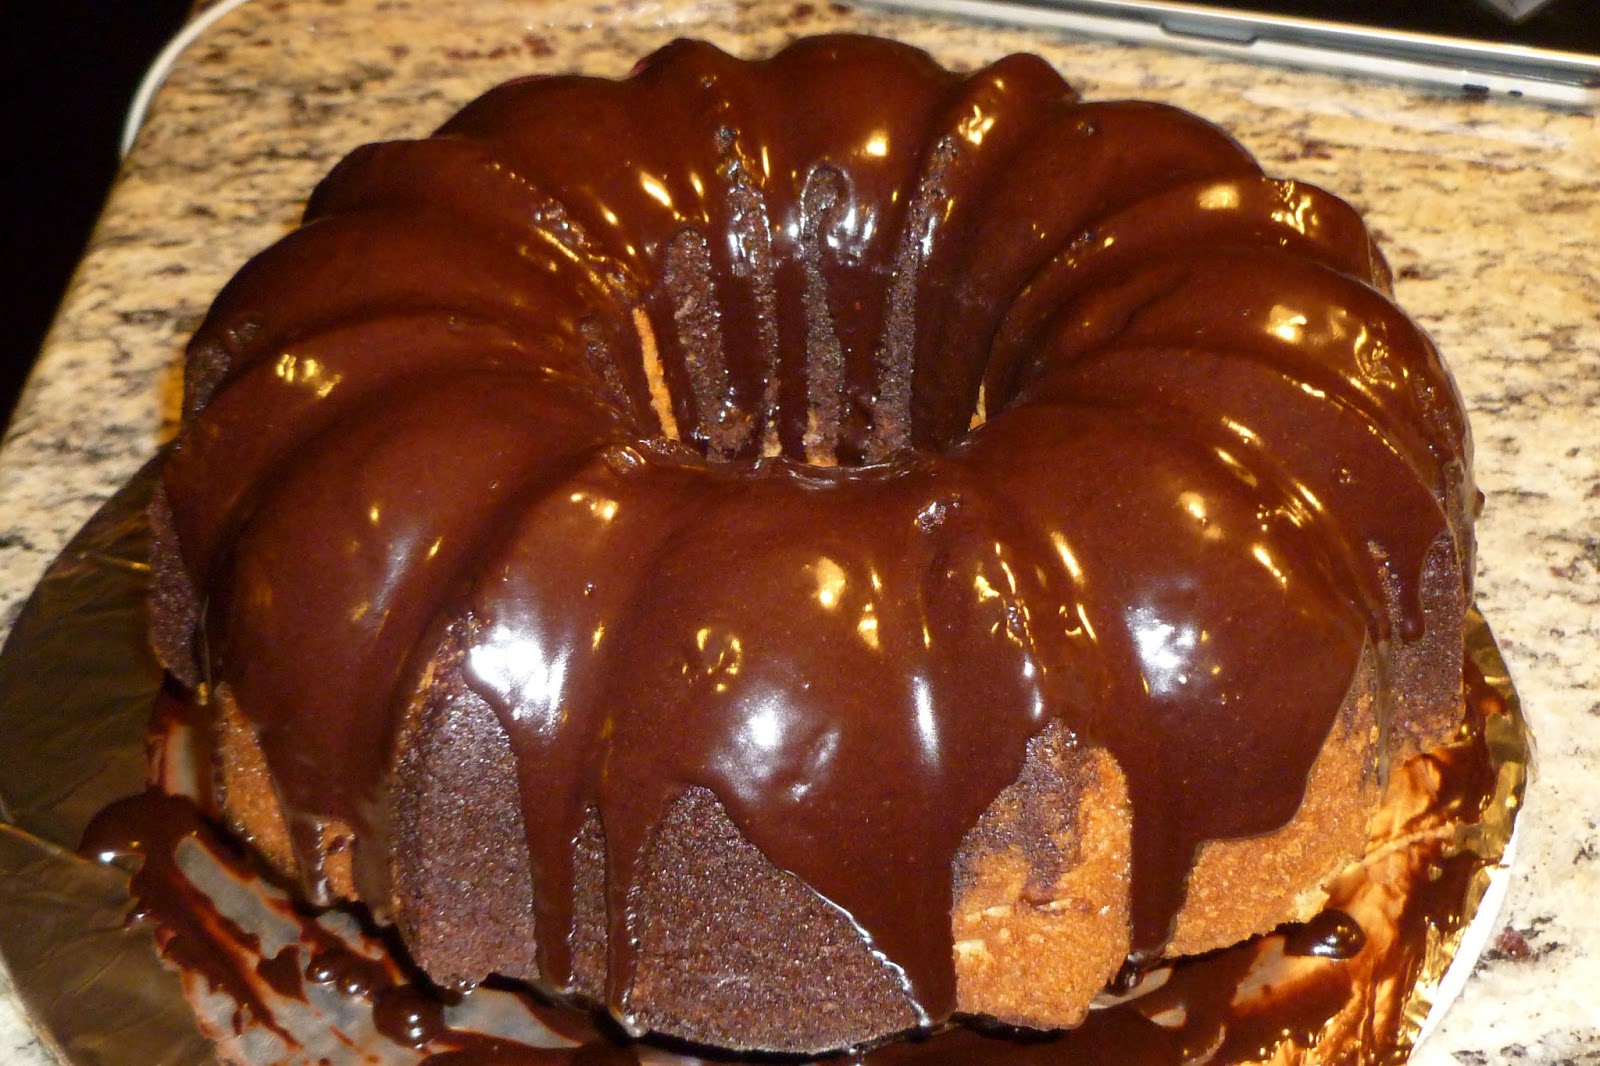 marble cake pound glaze chocolate baking pastry chef bundt rich